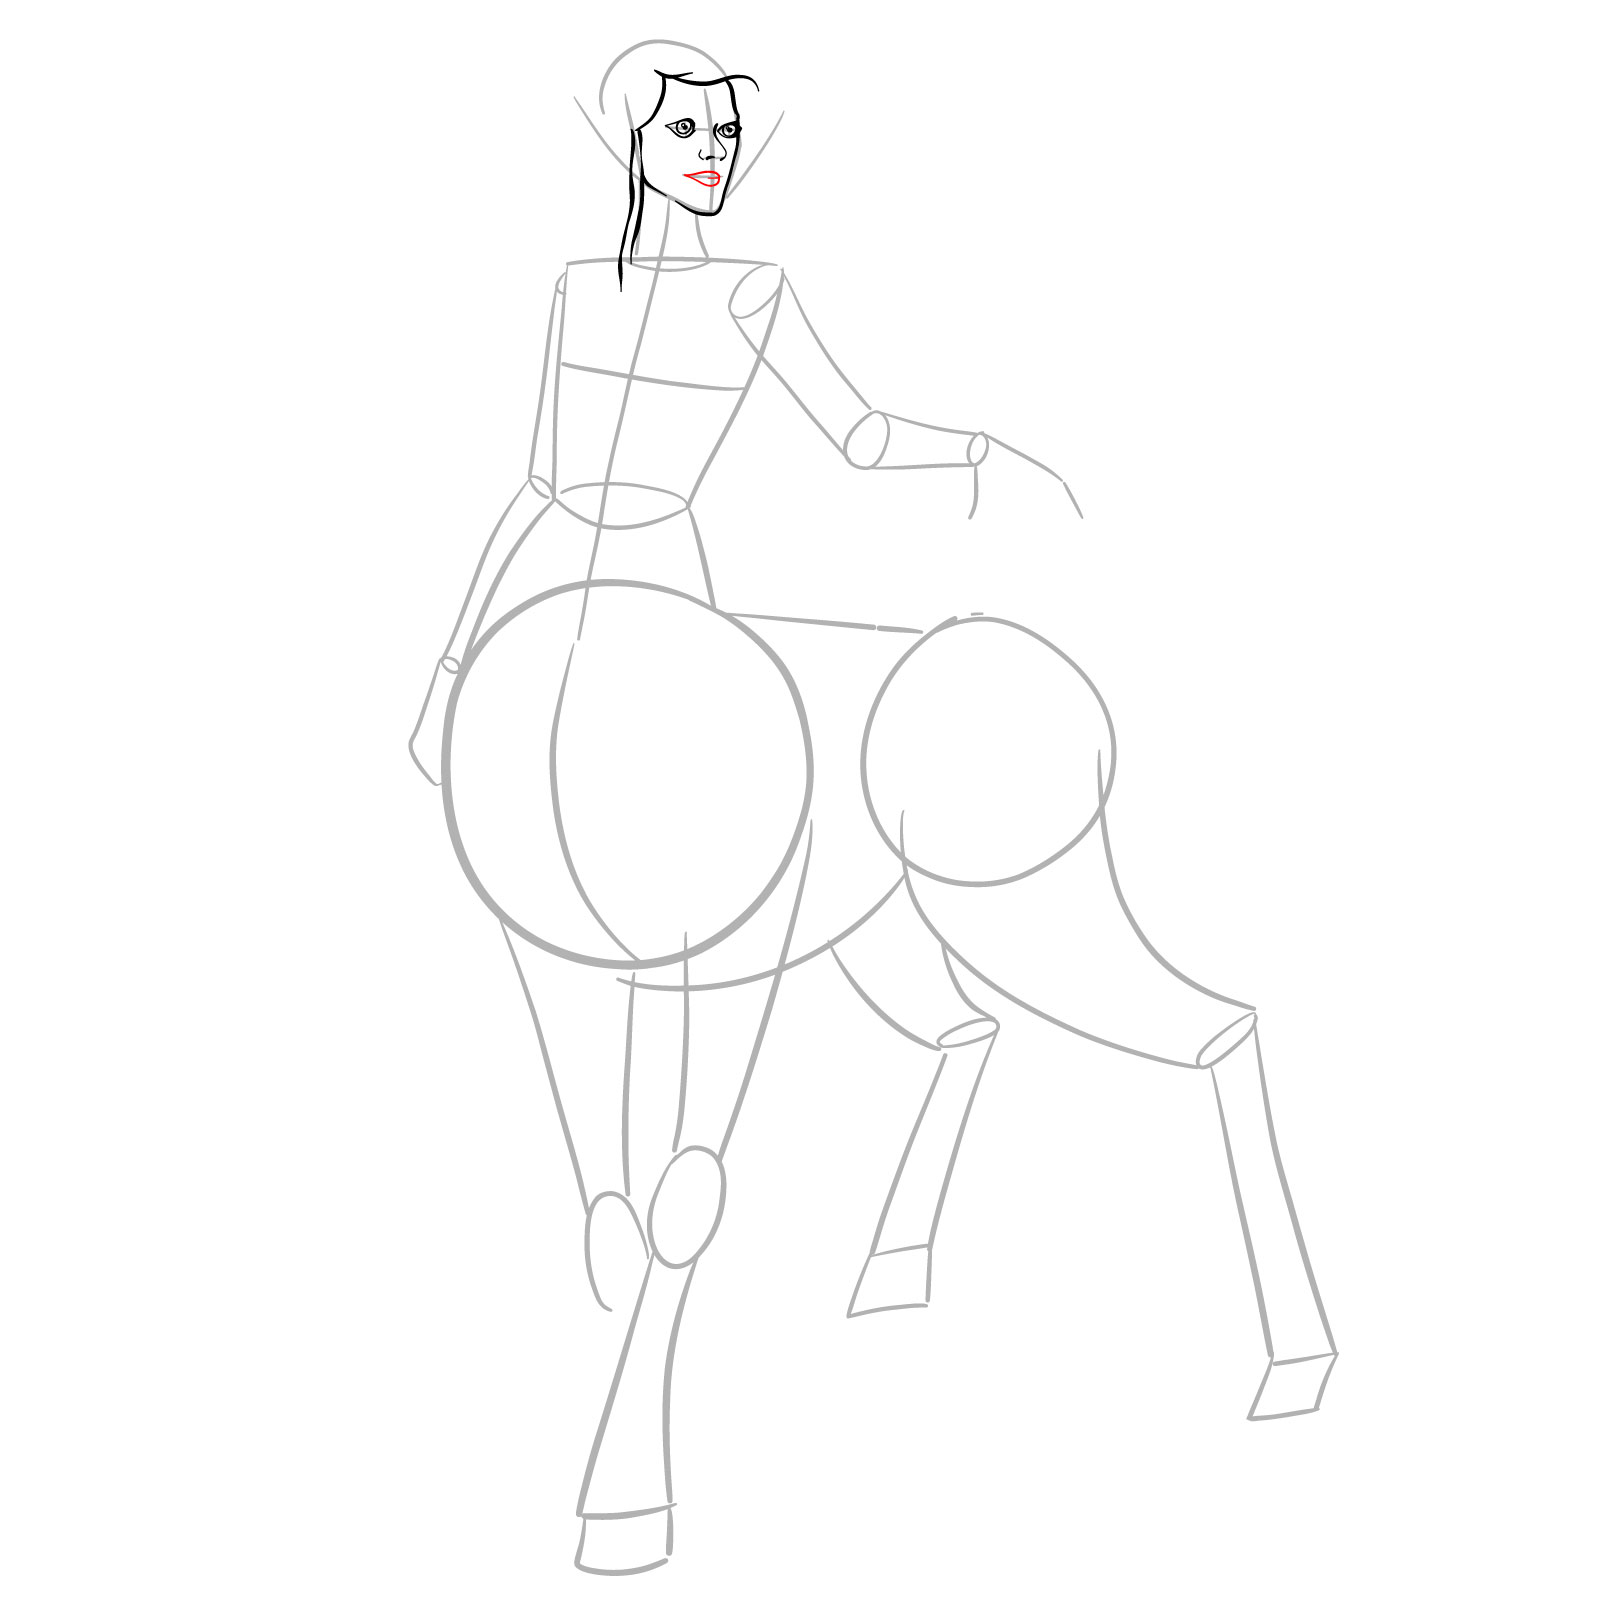 How to draw a Female Centaur - step 10